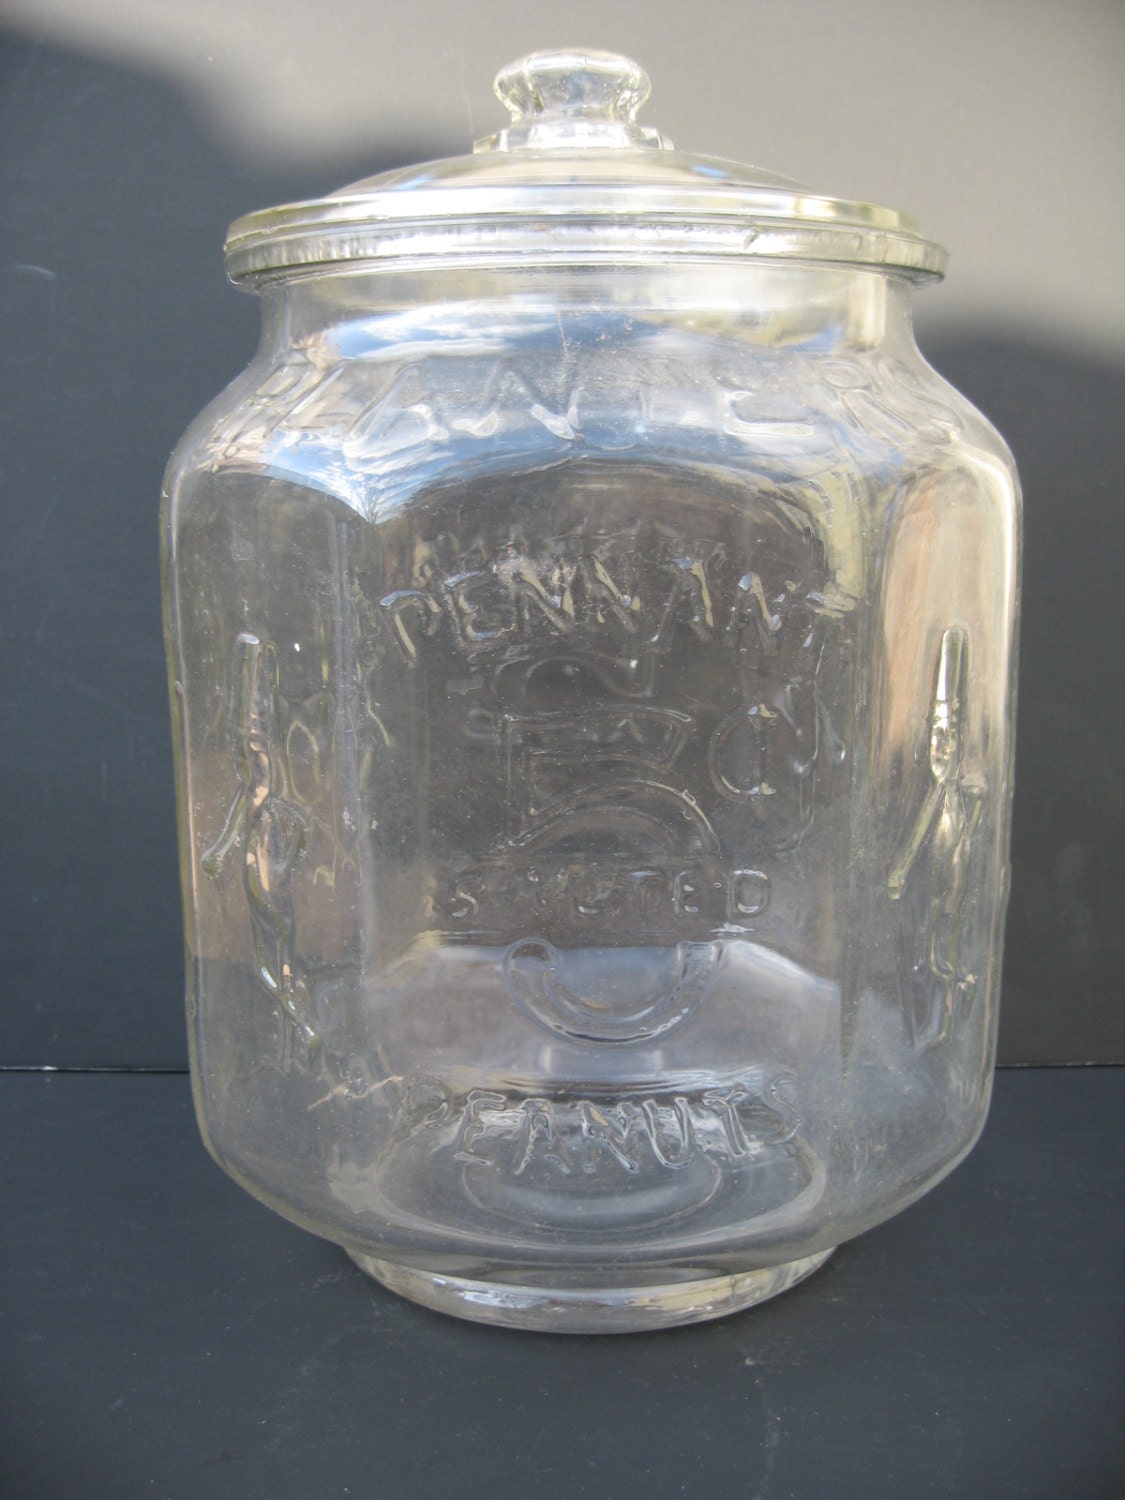 Vintage Planters Pennant Salted Peanuts Jar by Modarts1 on Etsy1125 x 1500